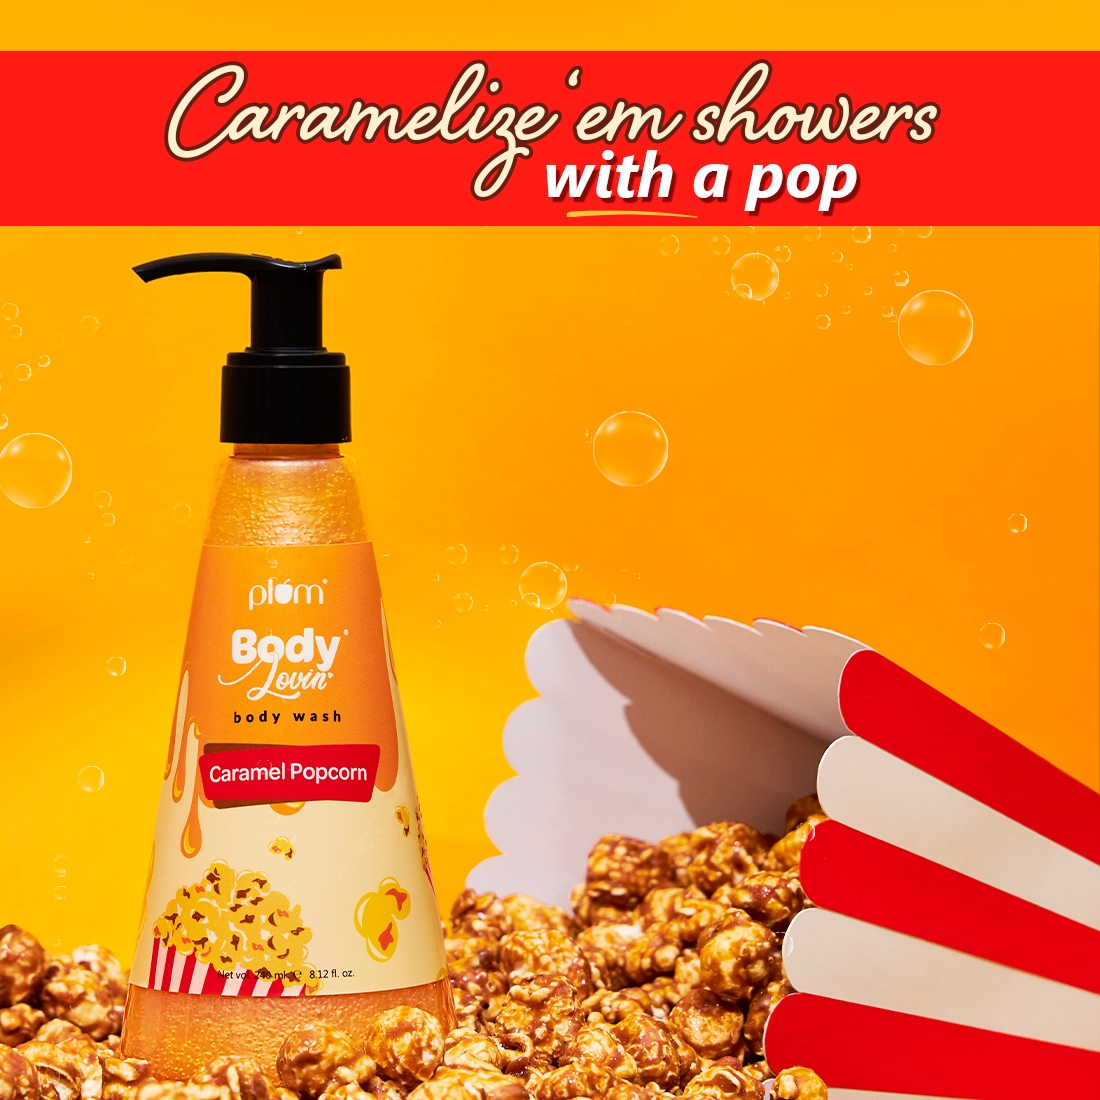 plum be good | Plum BodyLovin' Caramel Popcorn Body Wash | All Skin Types | Caramel Popcorn Fragrance | Non-Drying | Sulphate-Free | 100% Vegan 1